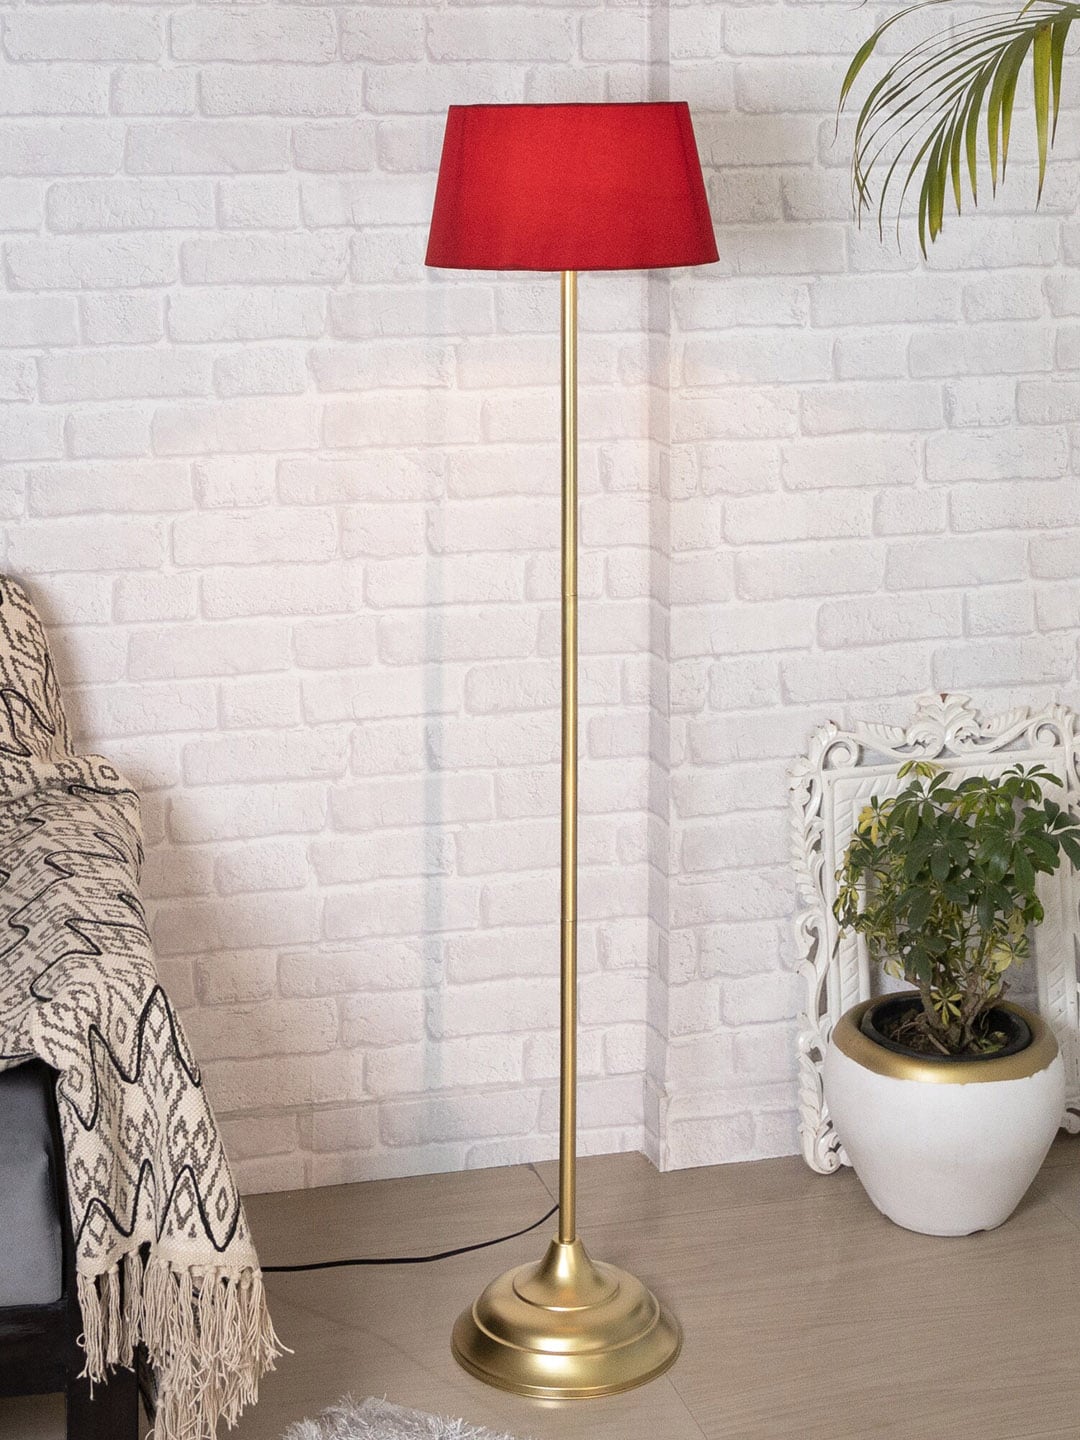 Homesake Red & Gold-Toned Shade Contemporary Metal Floor Lamp Price in India